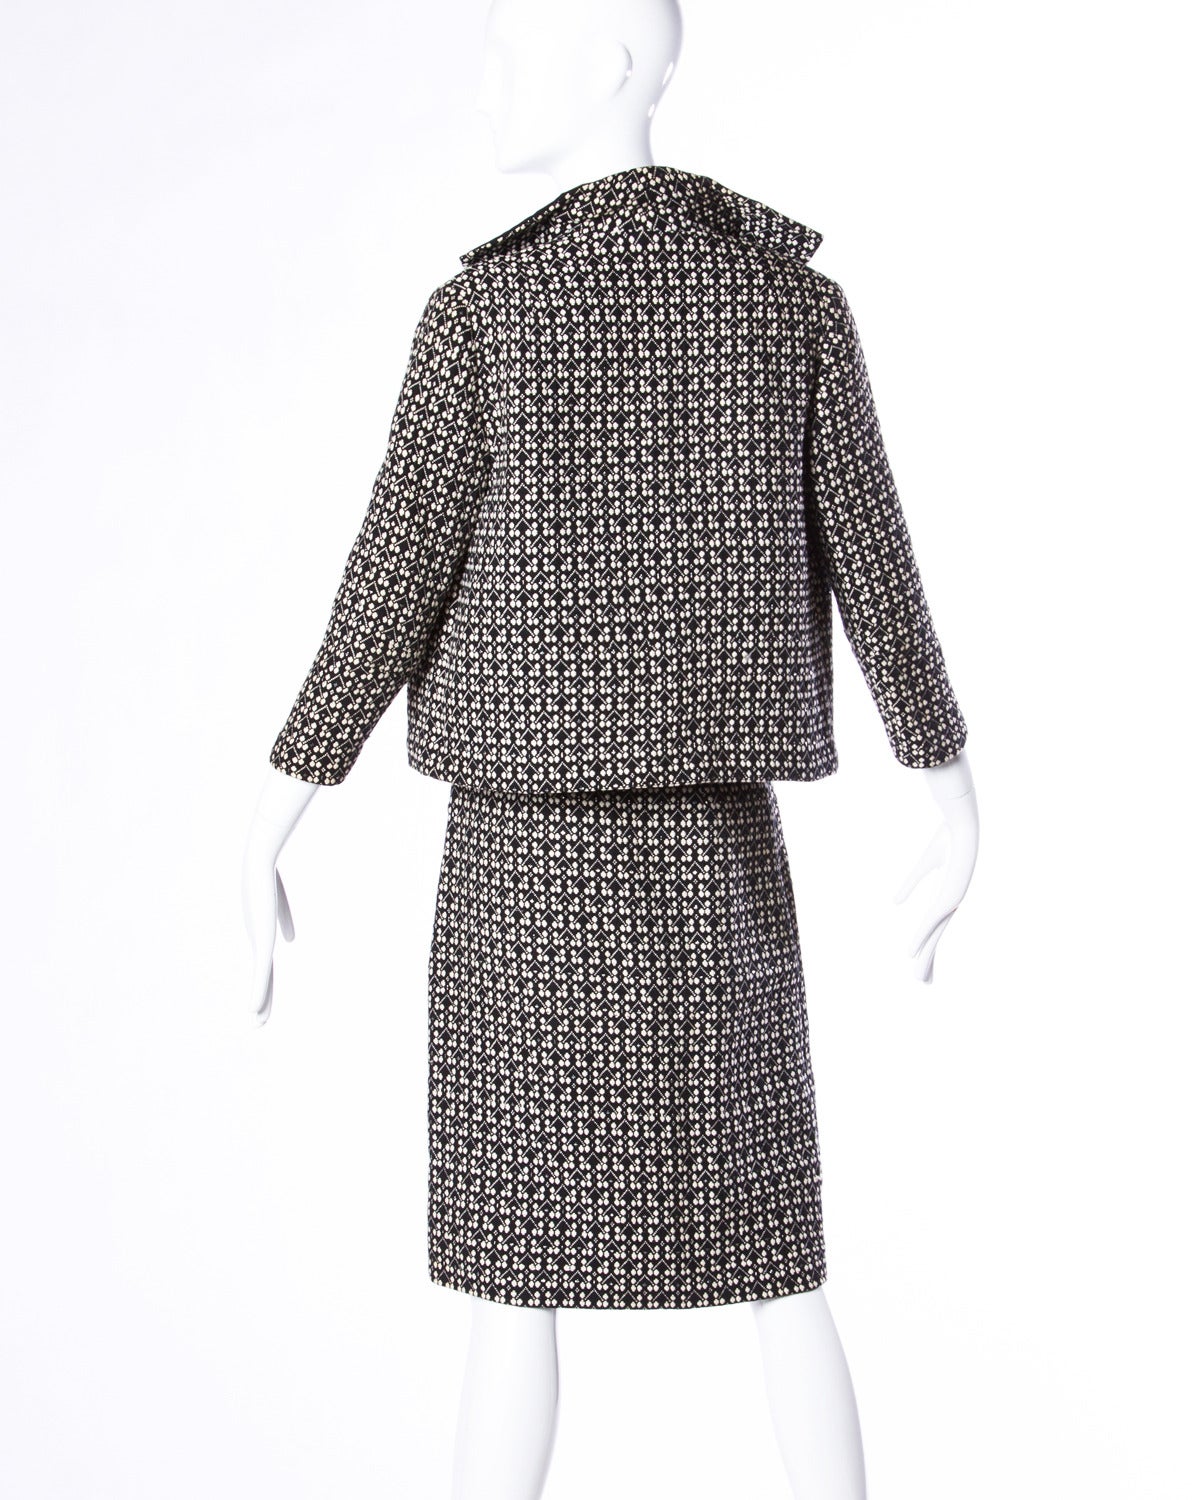 Vintage 1950s Black and White Tapestry Jacket + Skirt Suit Ensemble For ...